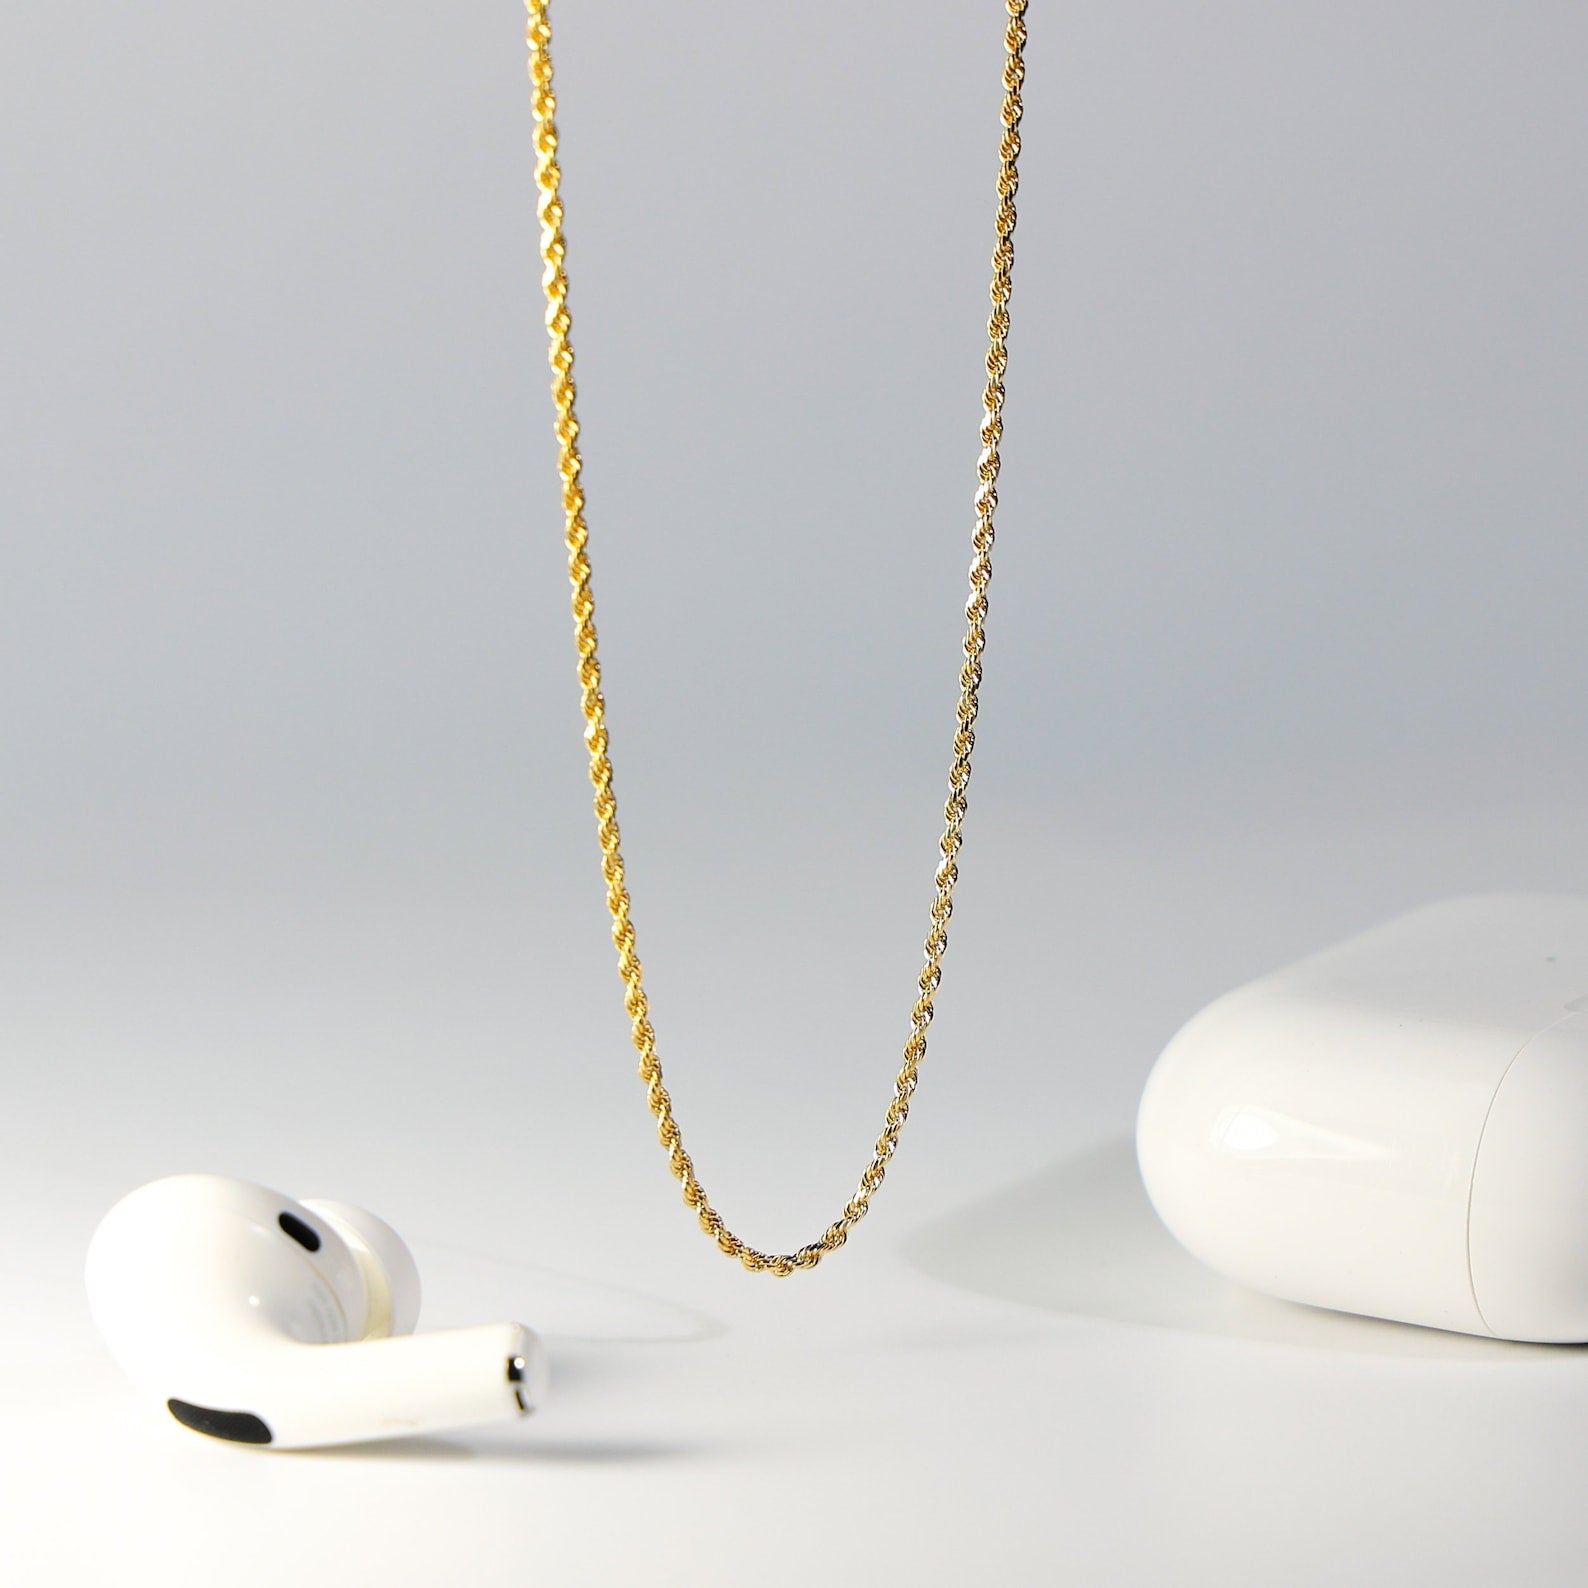 Gold Bear Pendant Model-2341 - Charlie & Co. Jewelry